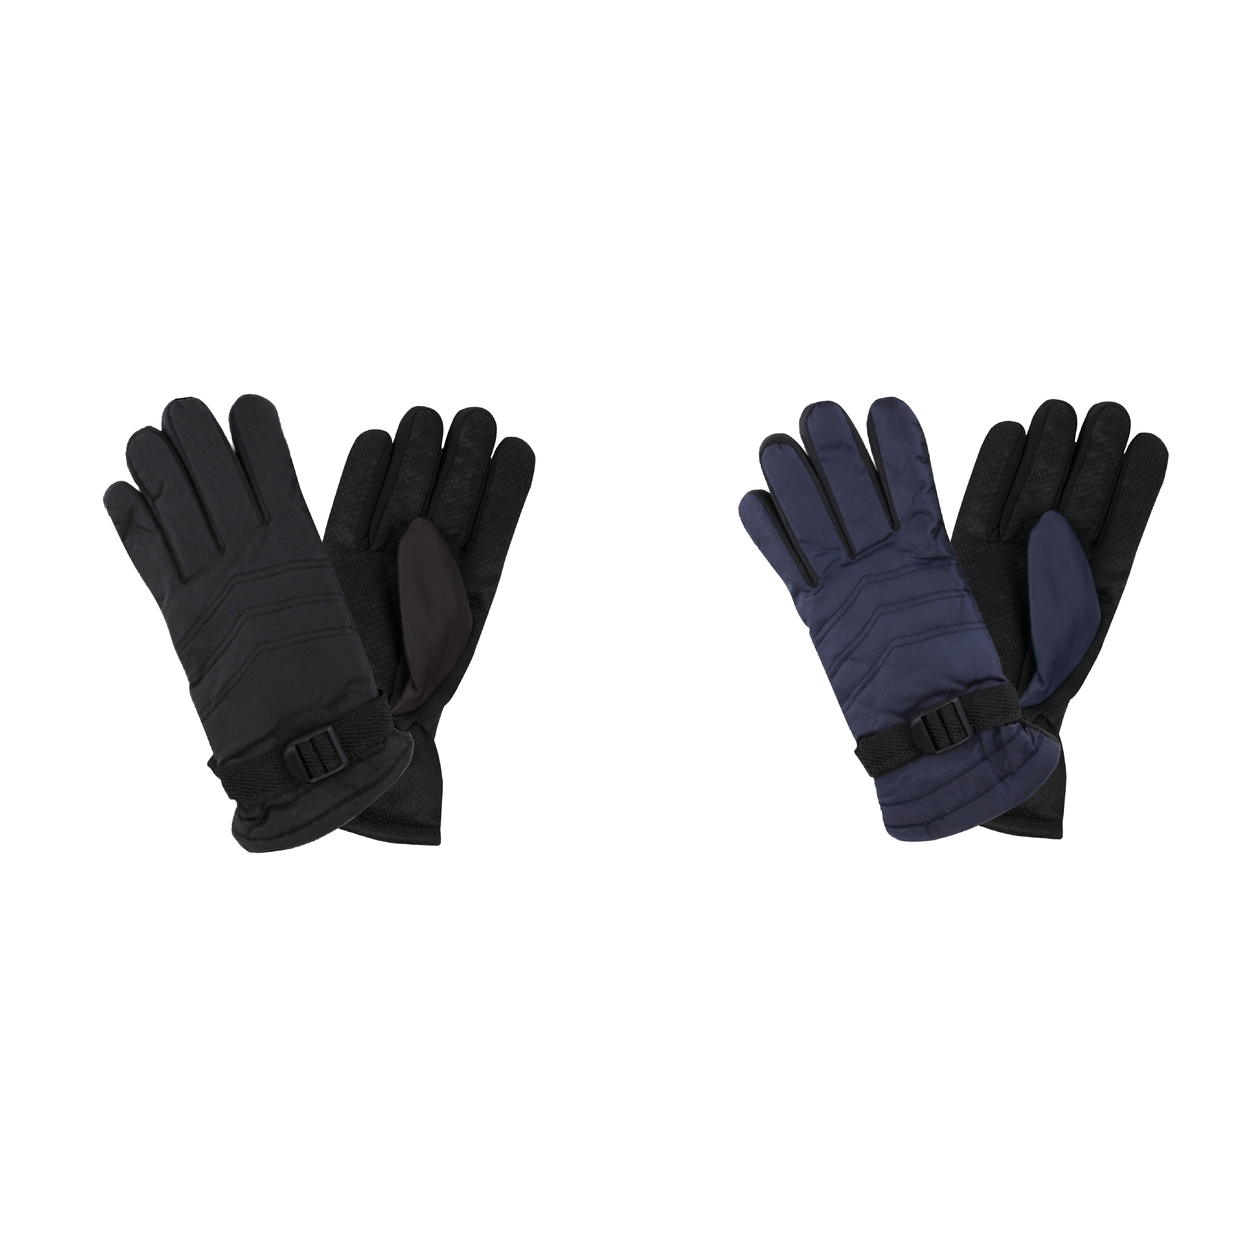 2-Pairs Women's Cozy Fur Lined Snow Ski Warm Winter Gloves - Black/blue